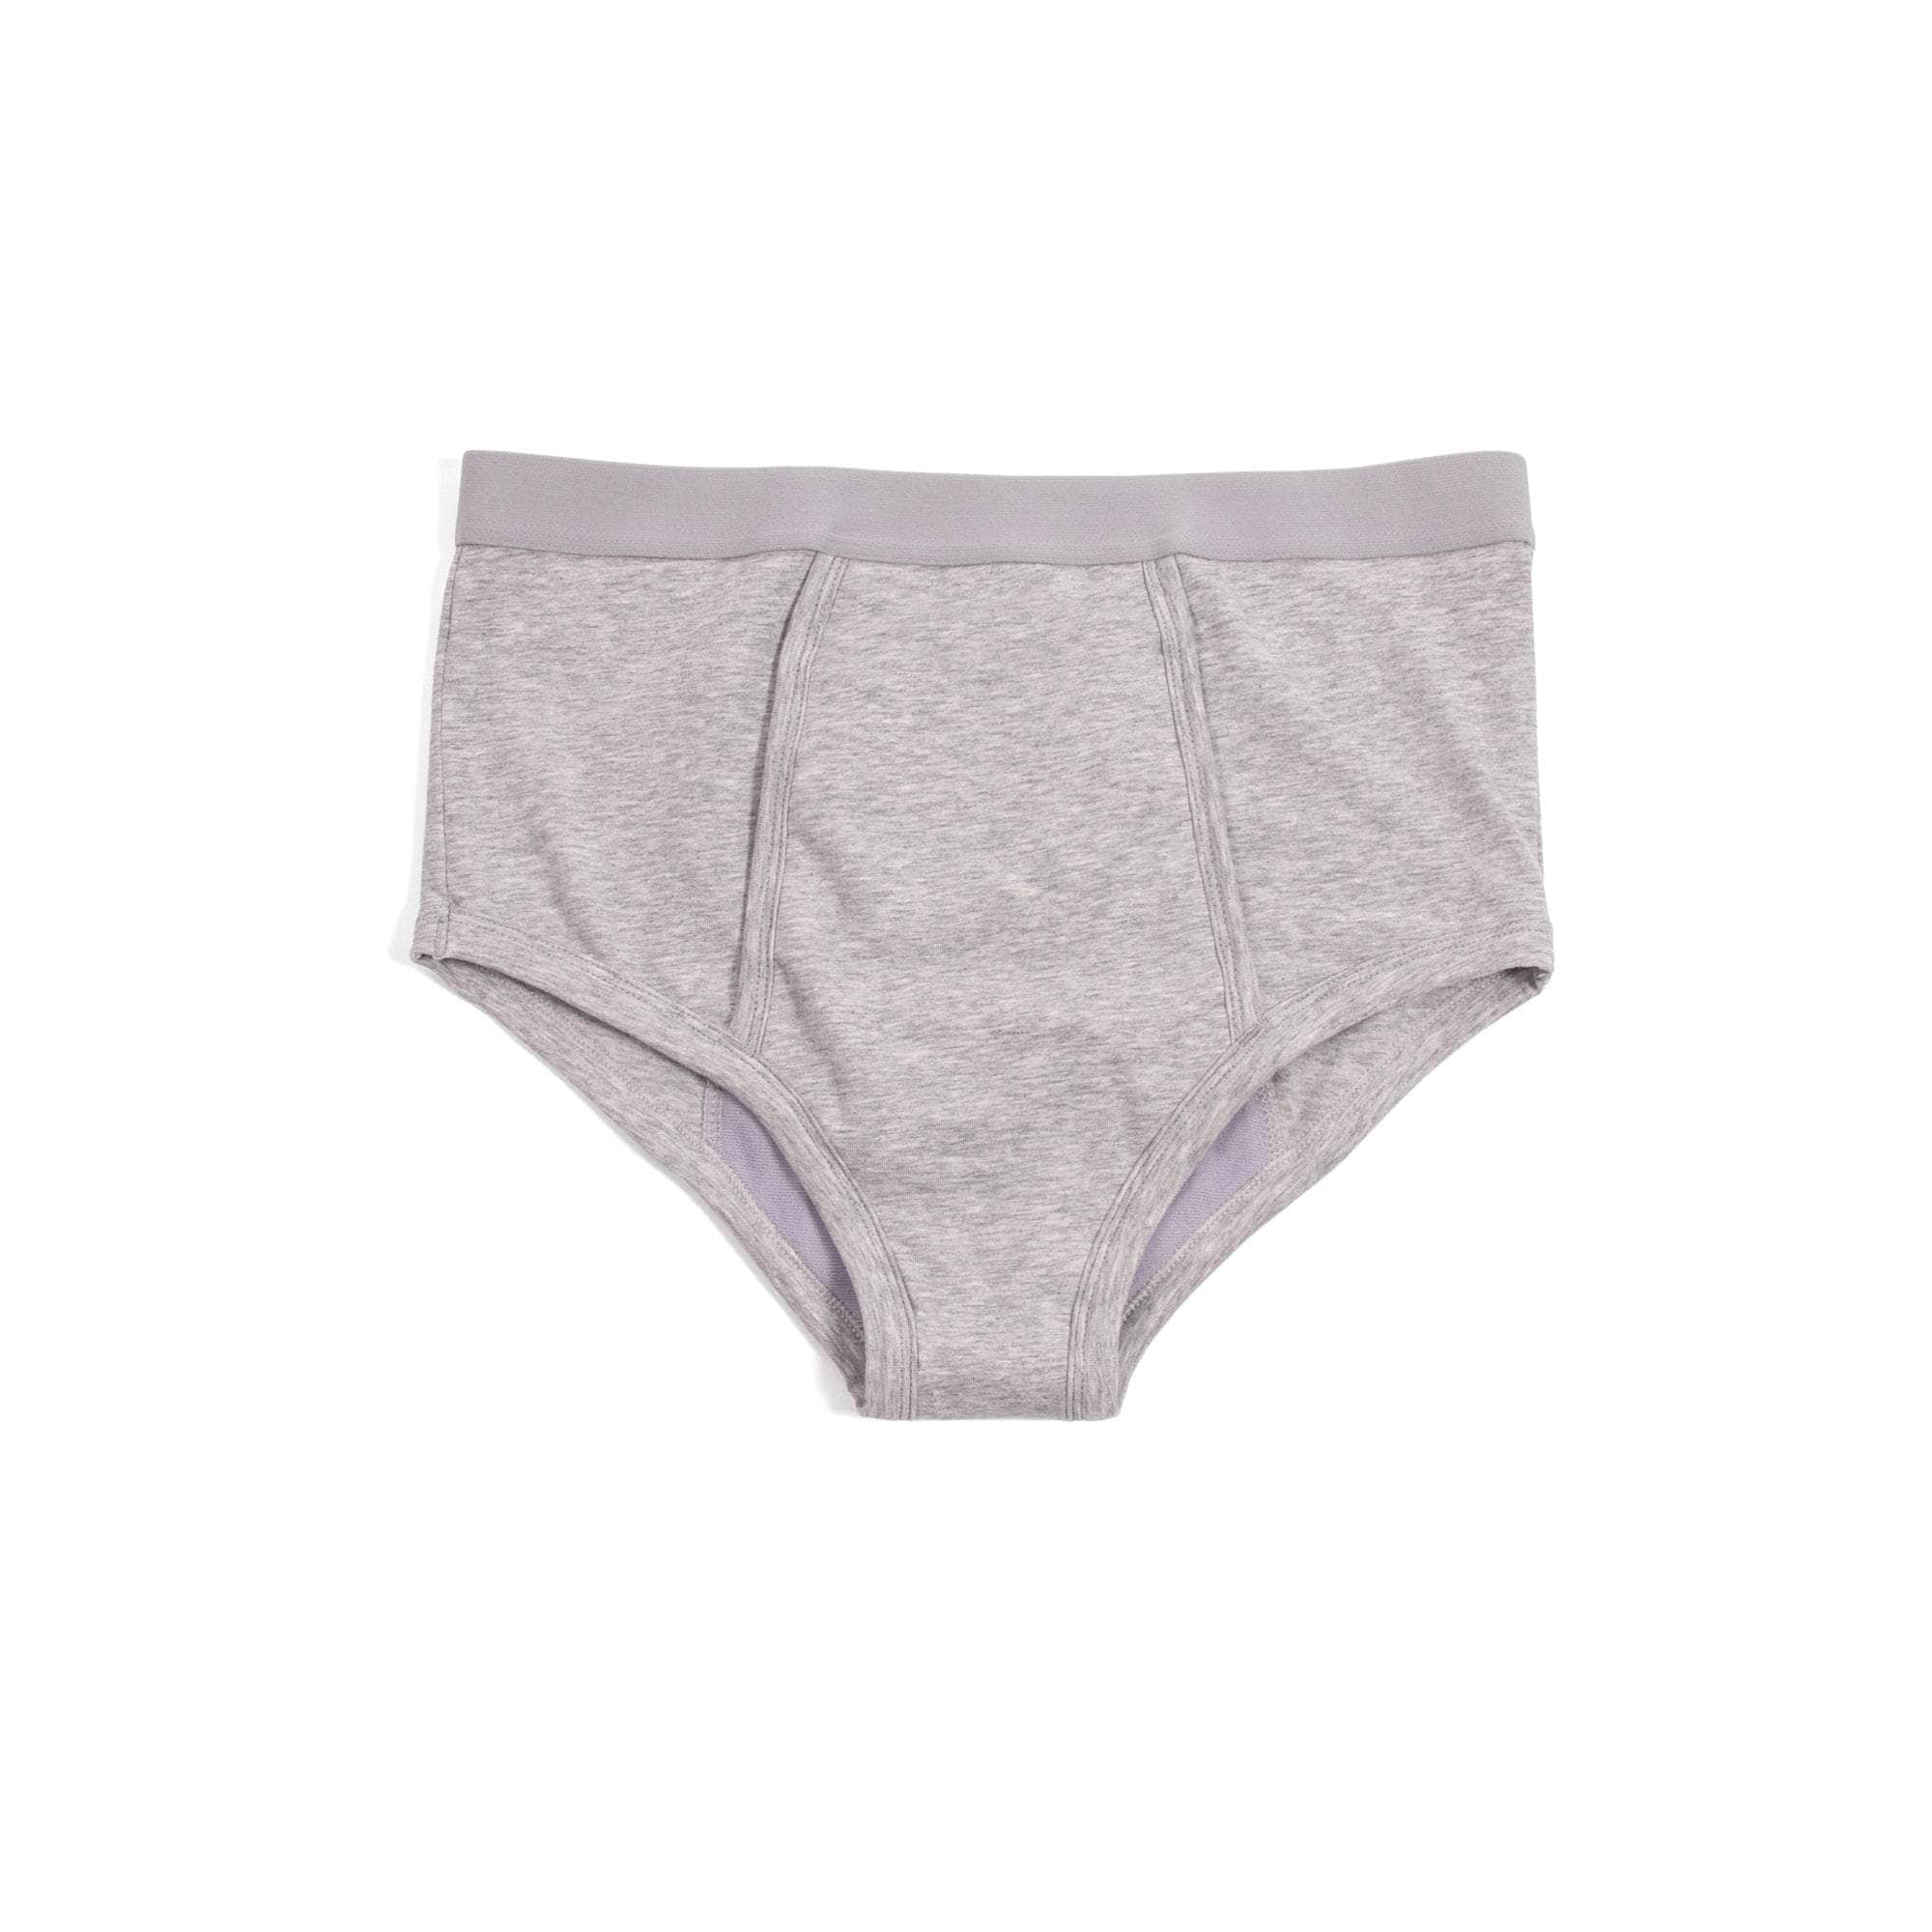 Free Incontinence Underwear Sample – CARERSPK